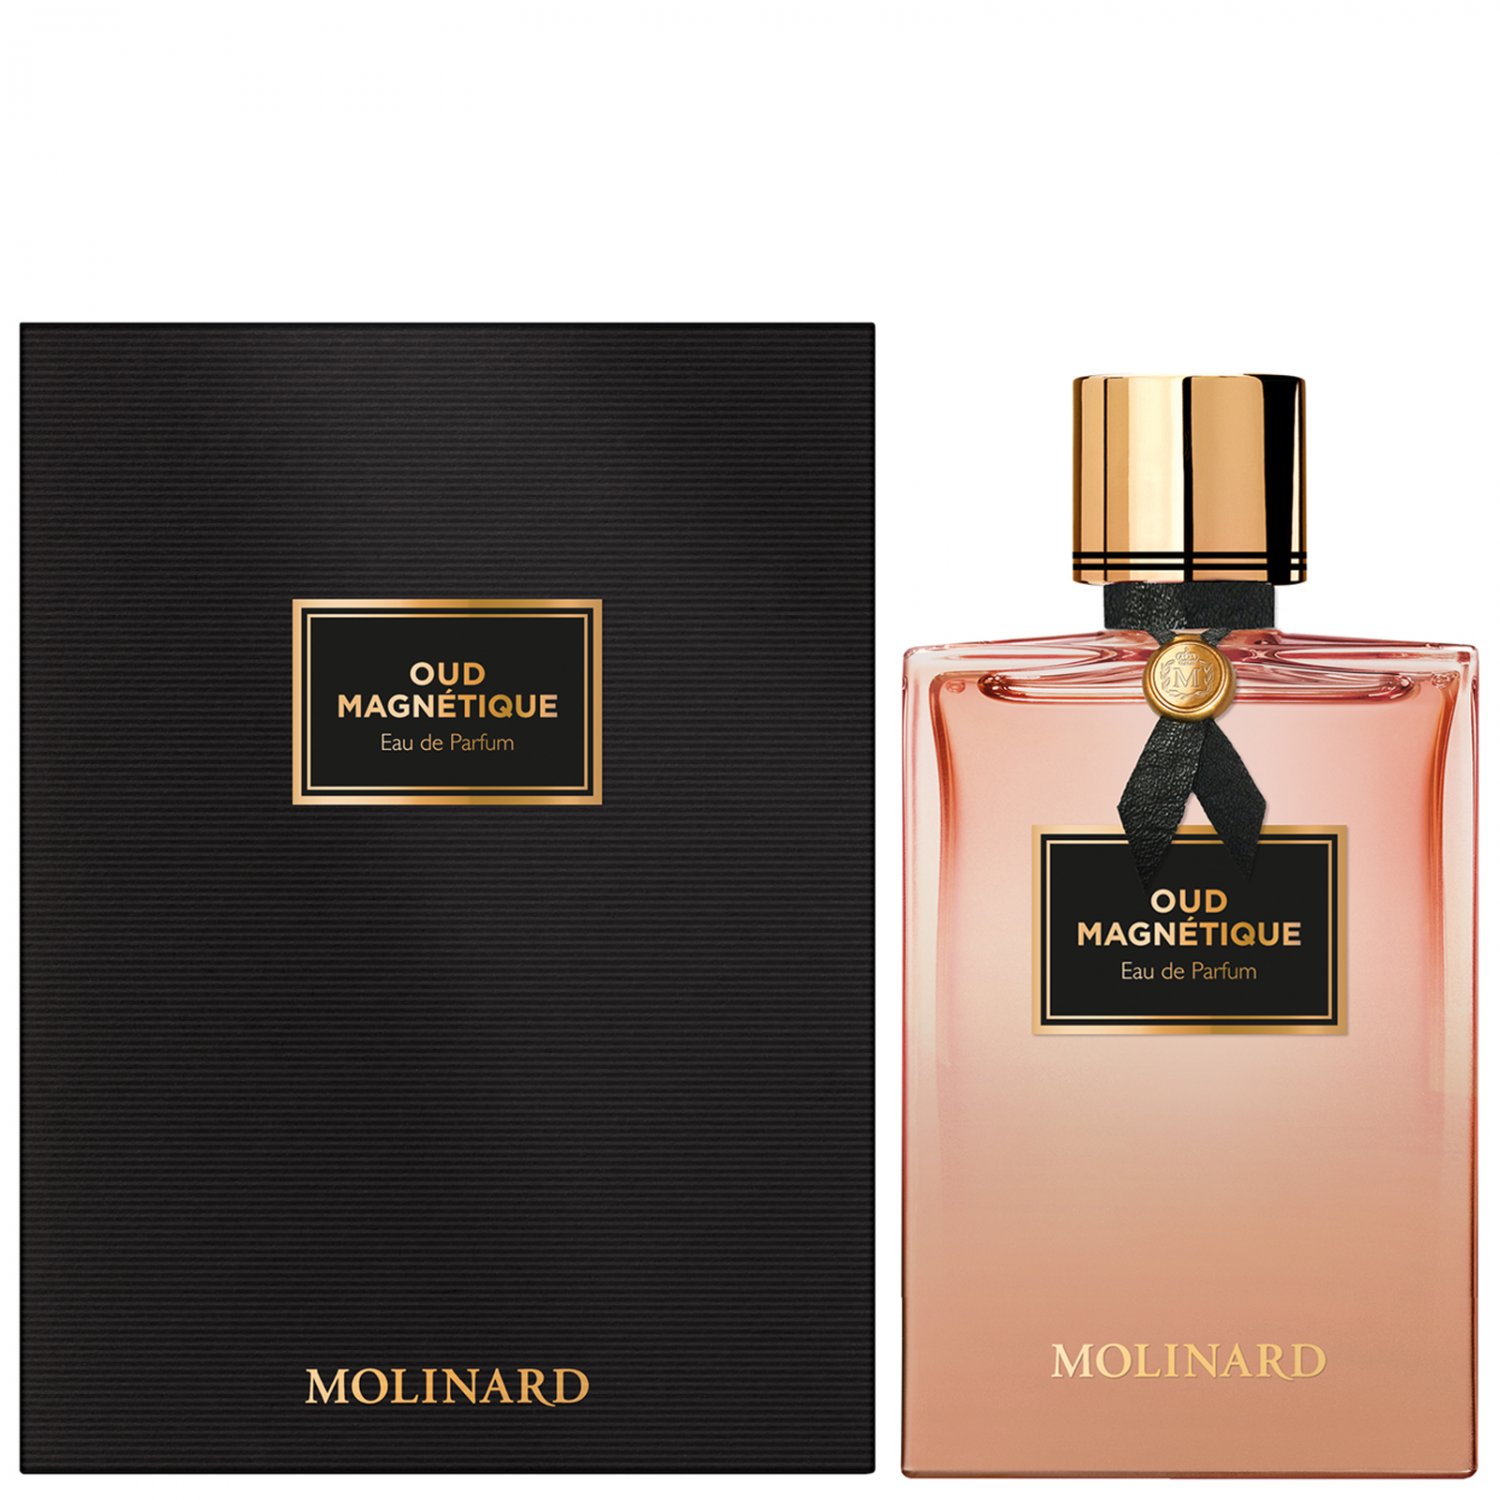 Molinard Oud Magnetique Perfume Eau de Parfum 2.5 oz/75 ml spray.